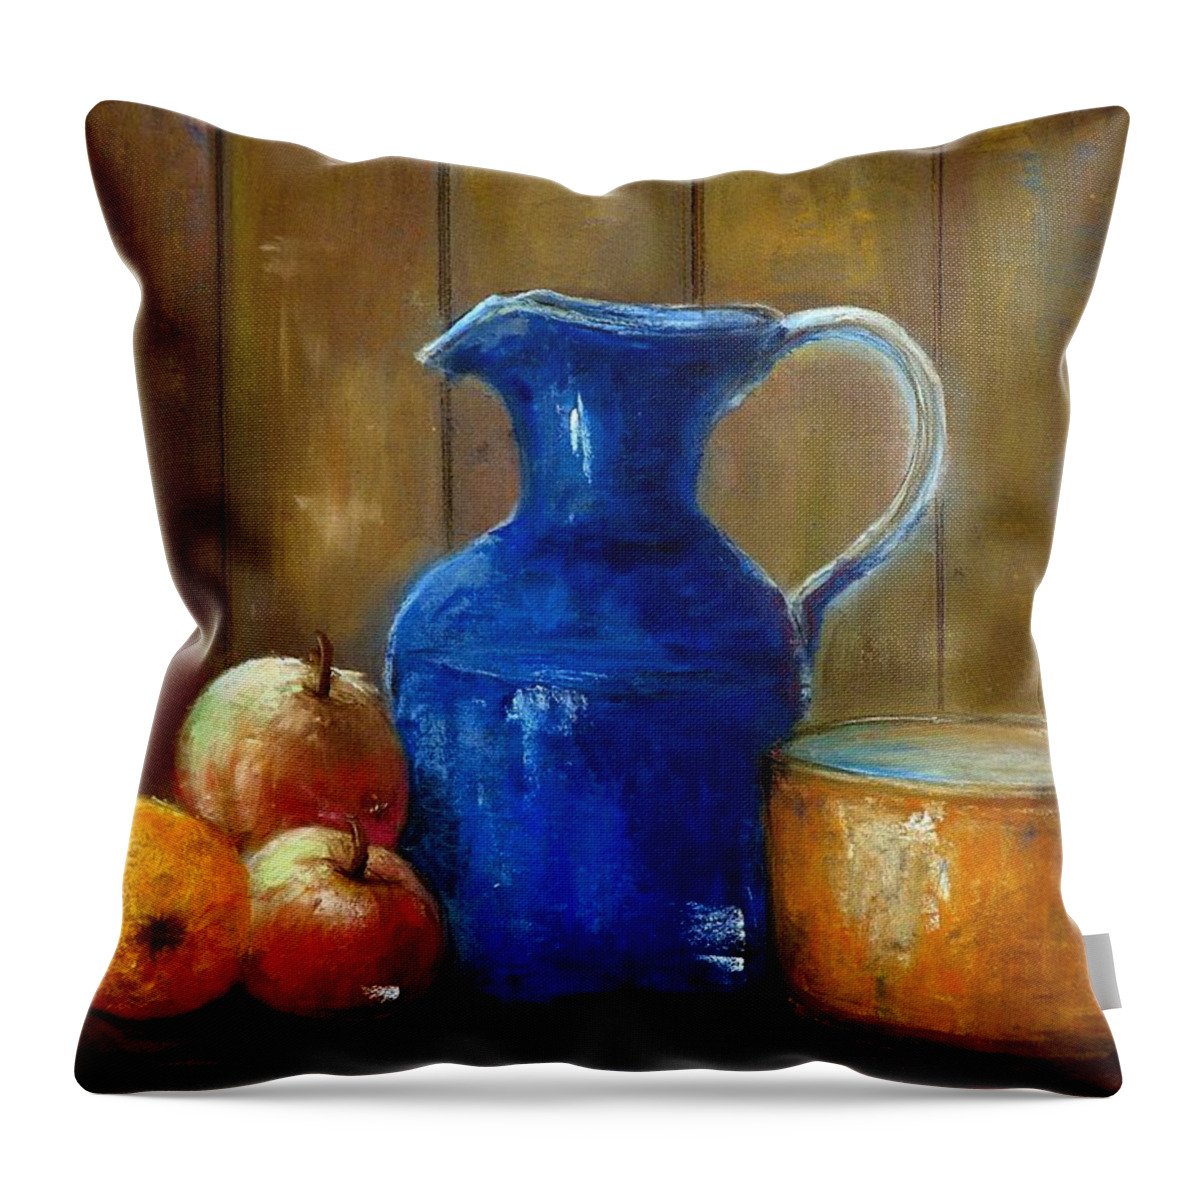 Historical Throw Pillow featuring the painting Historical Jamestown Virginia Blue Colbalt Pitcher by Bernadette Krupa